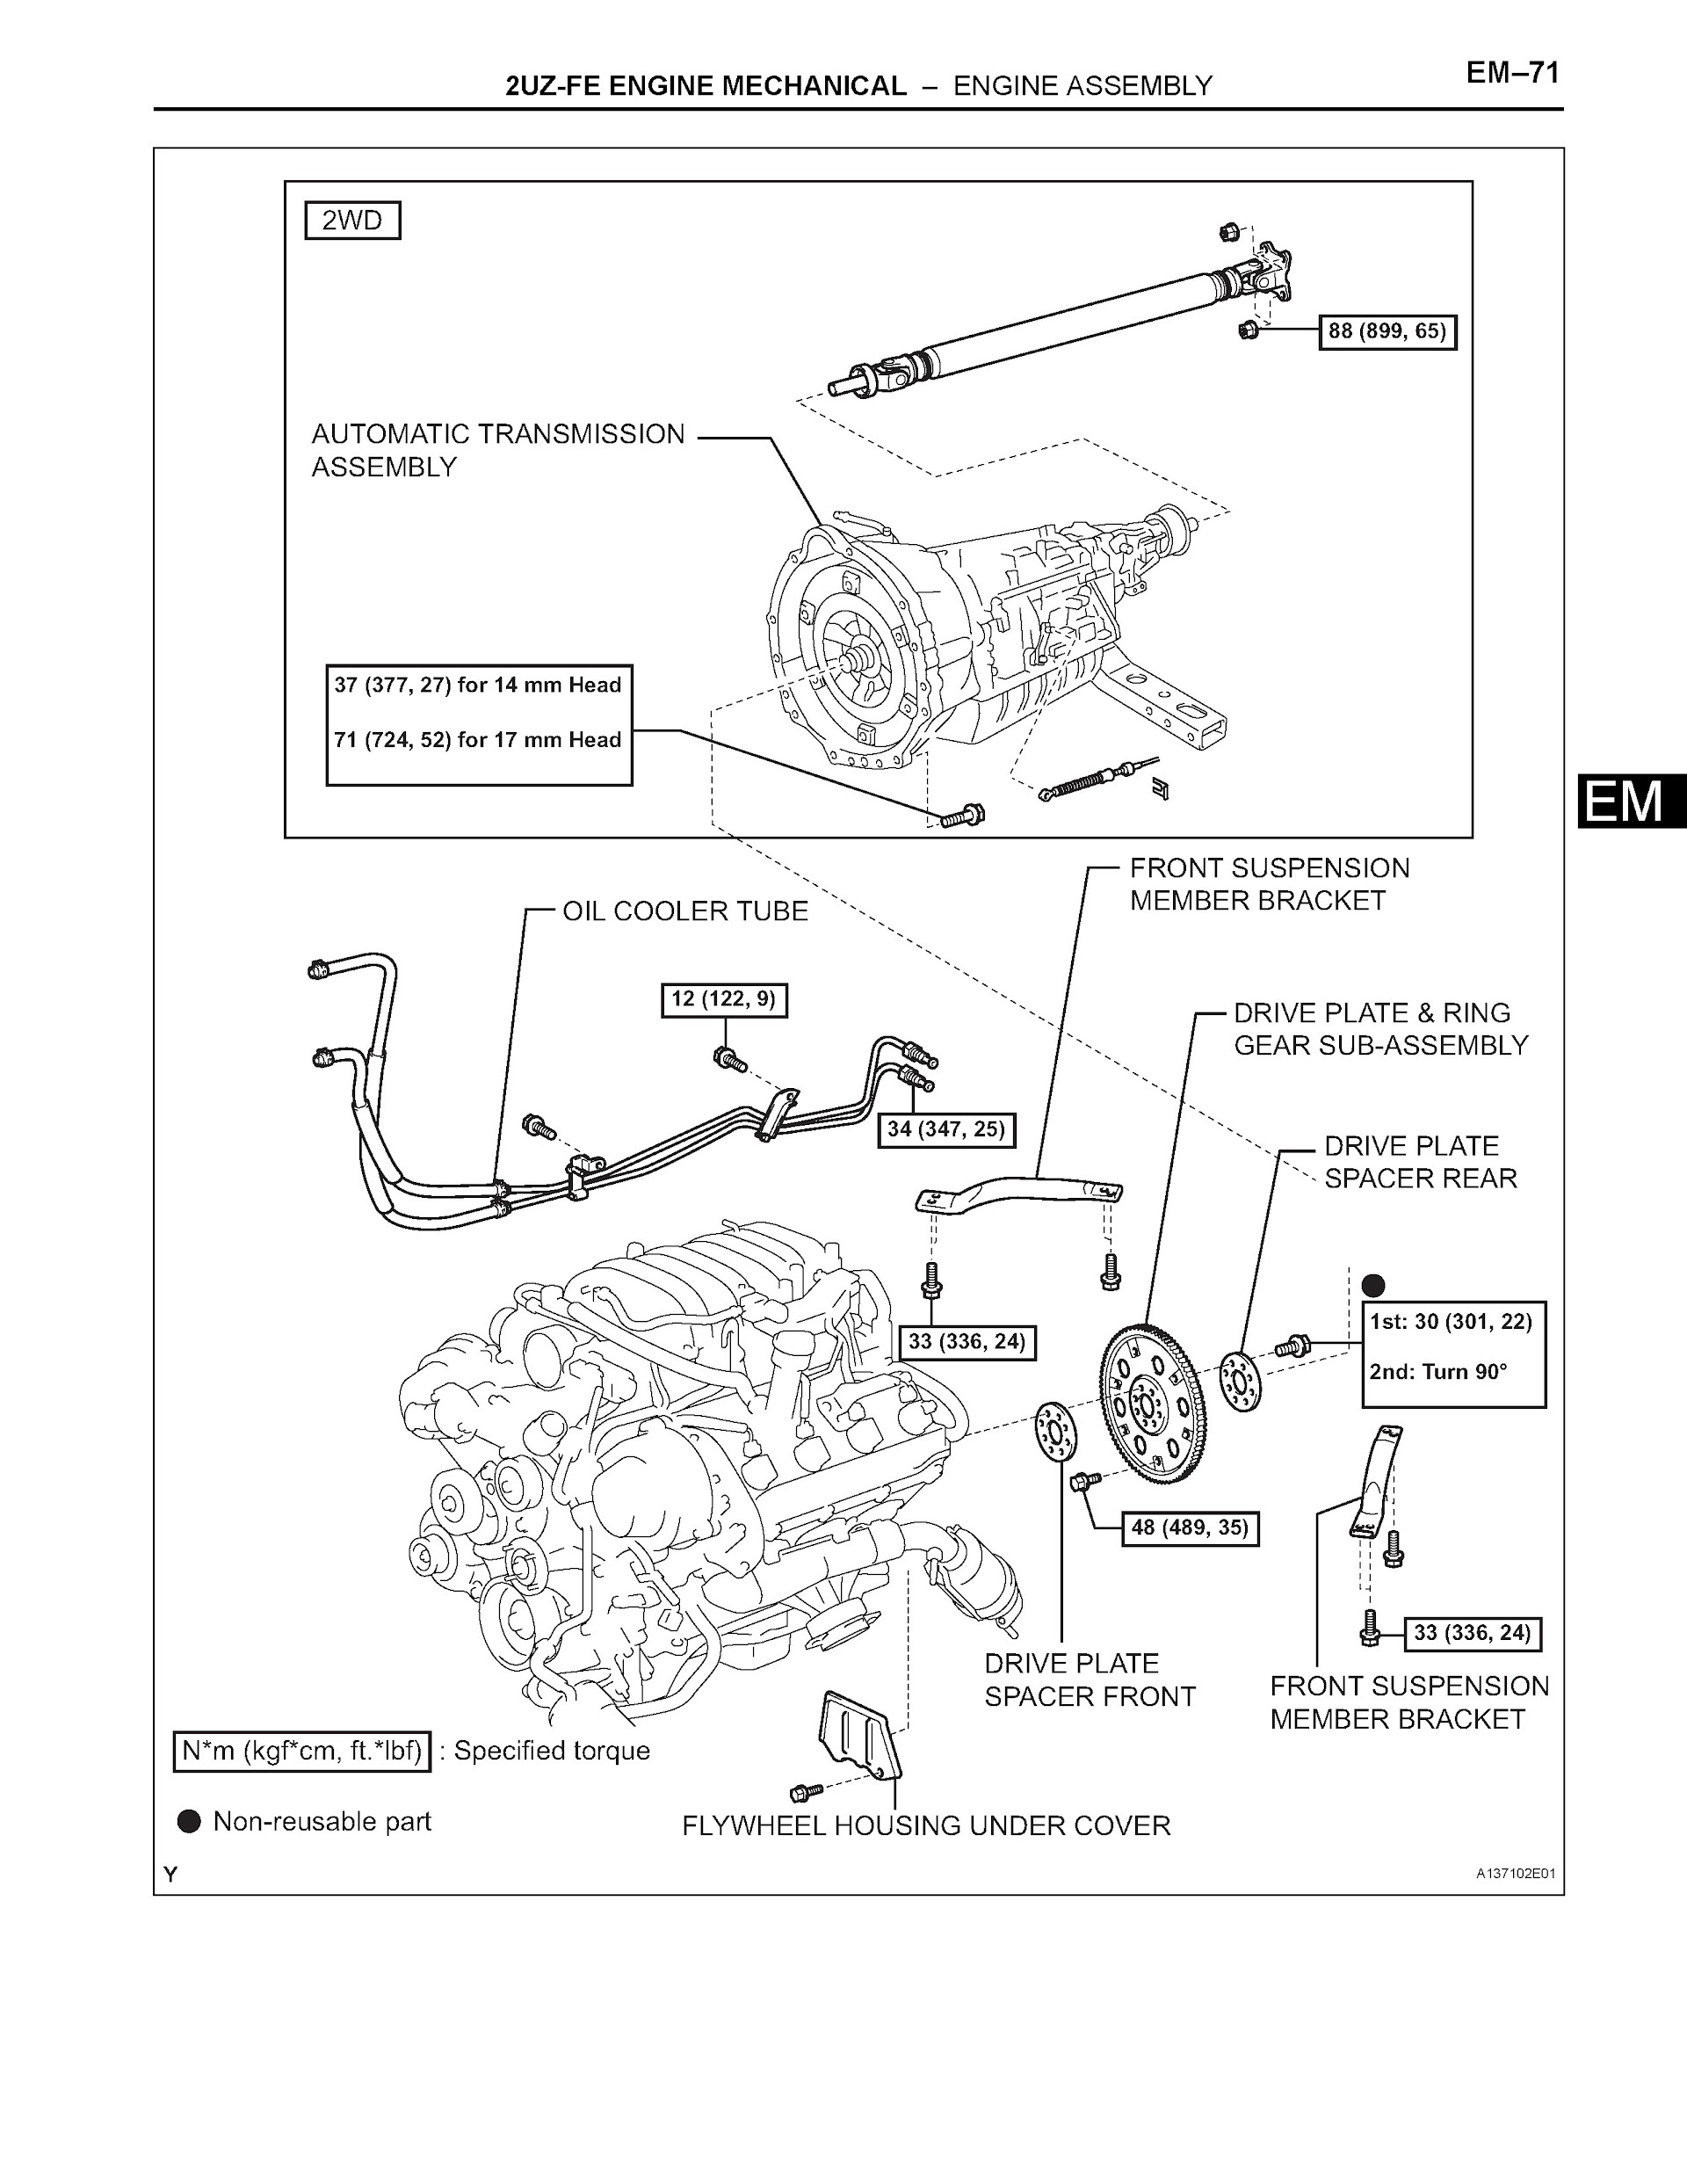 2007 Toyota 4Runner Repair Manual, 2UZ-FE Engine Mechanical